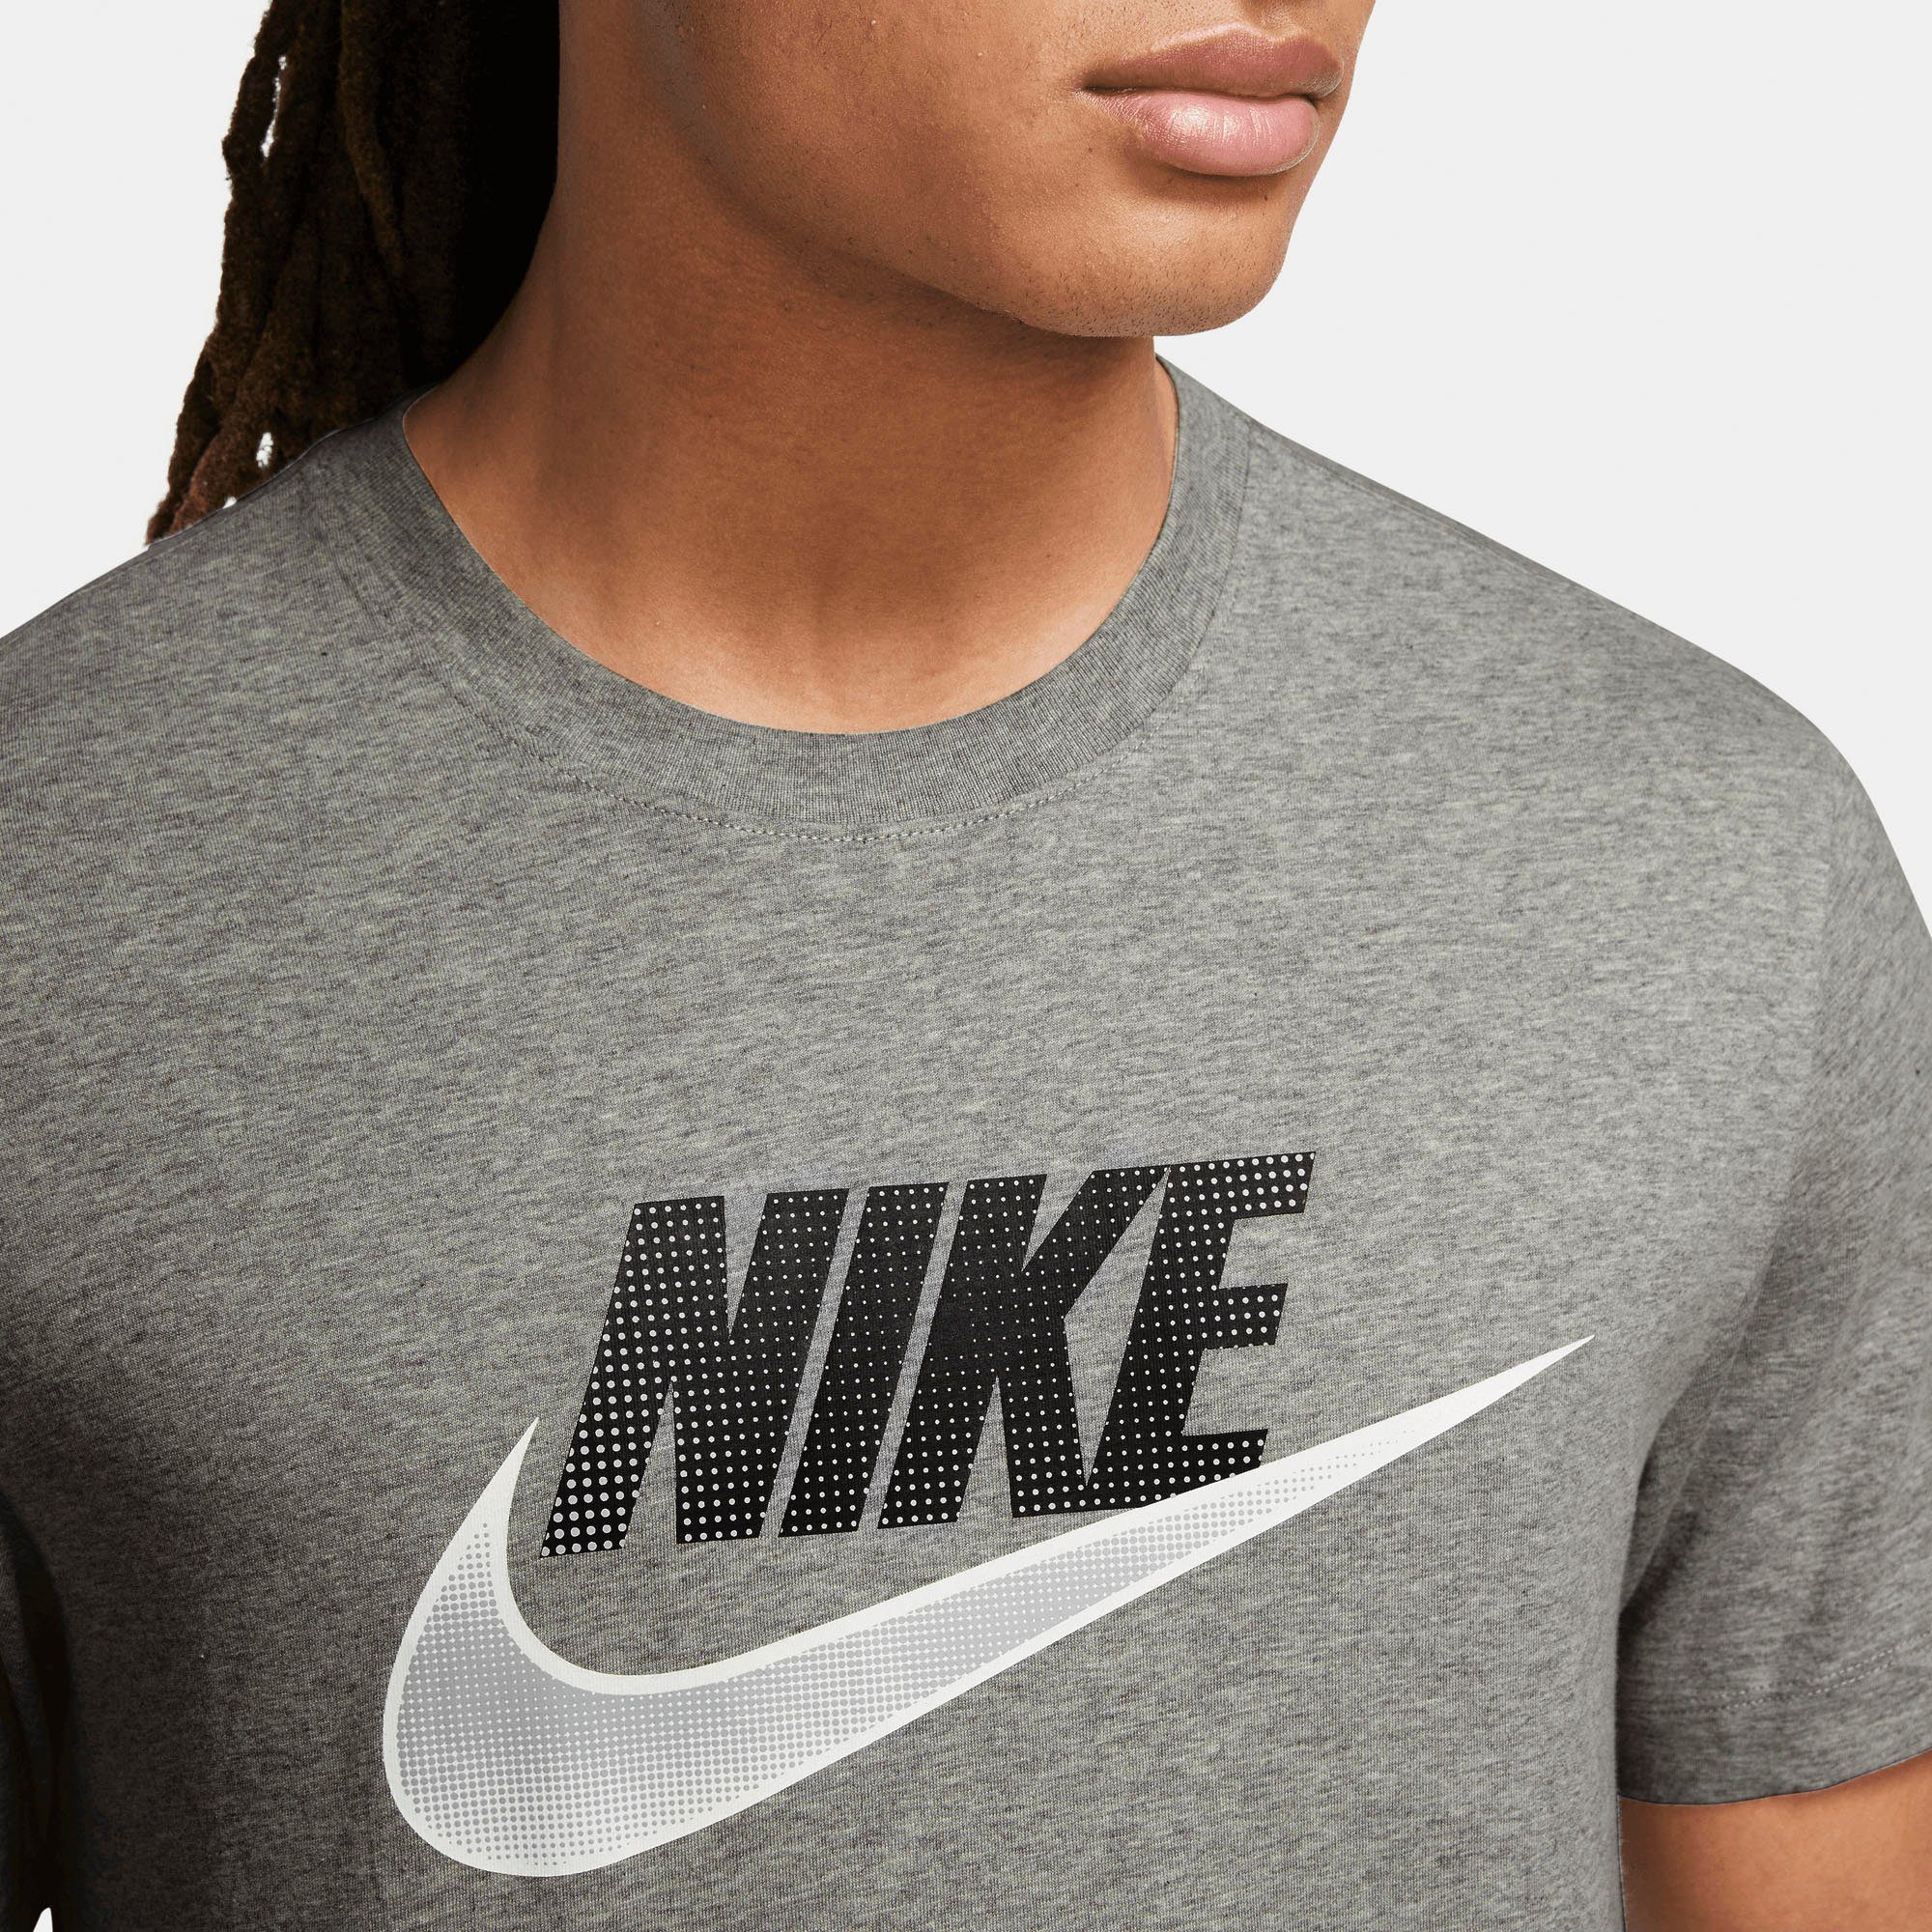 Nike Sportswear T-Shirt Men's T-Shirt GREY DK HEATHER